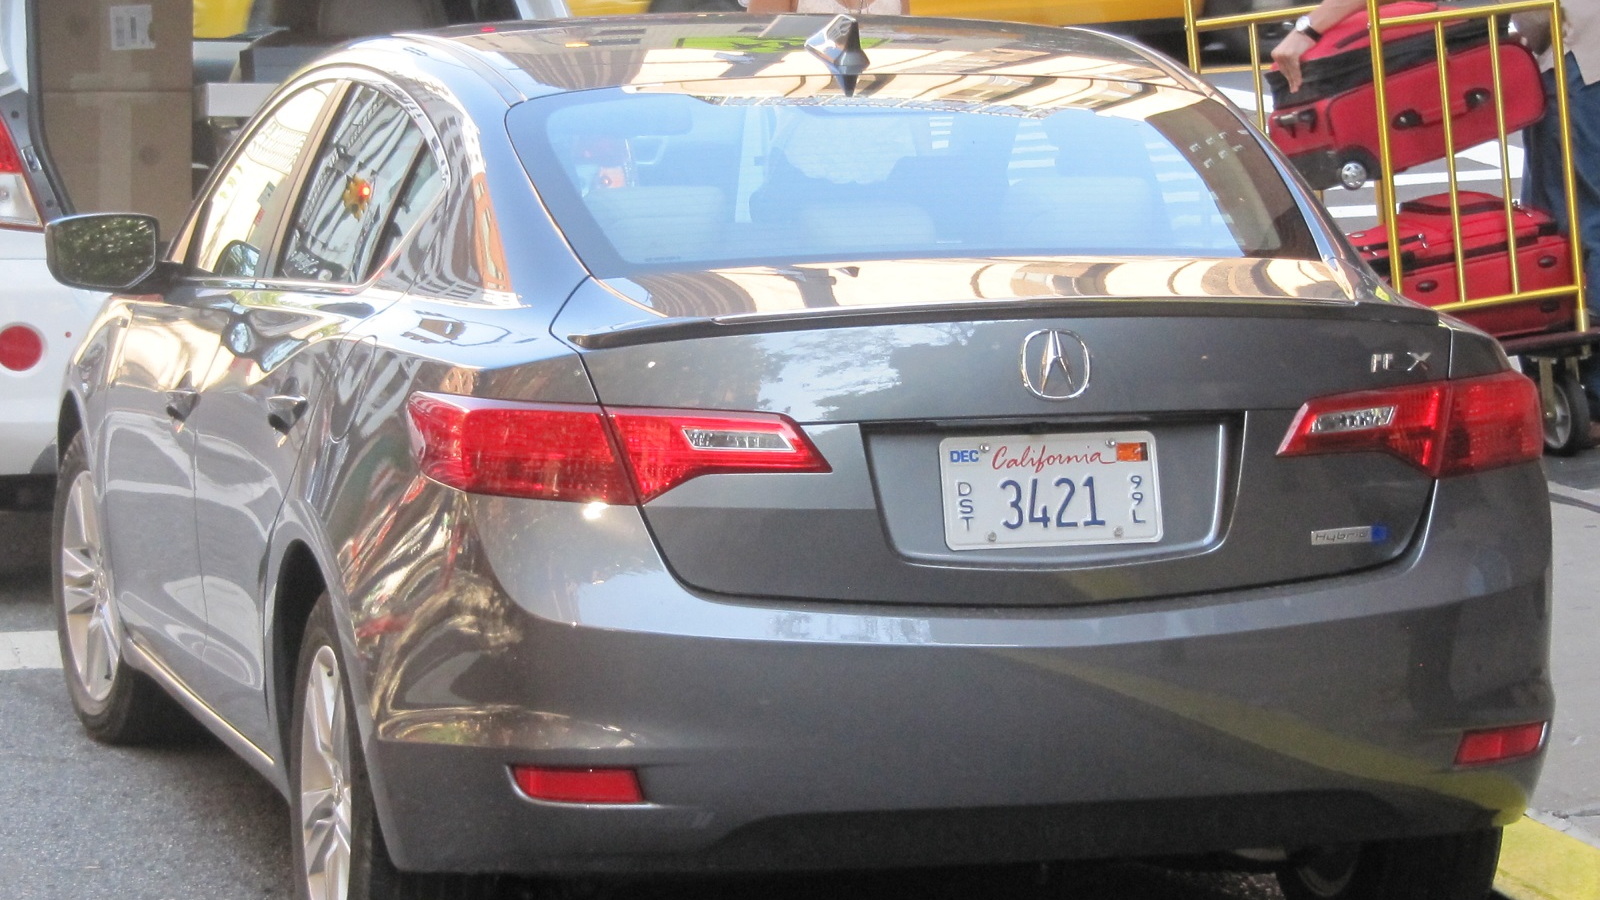 2013 Acura ILX Hybrid, New York City, July 2012